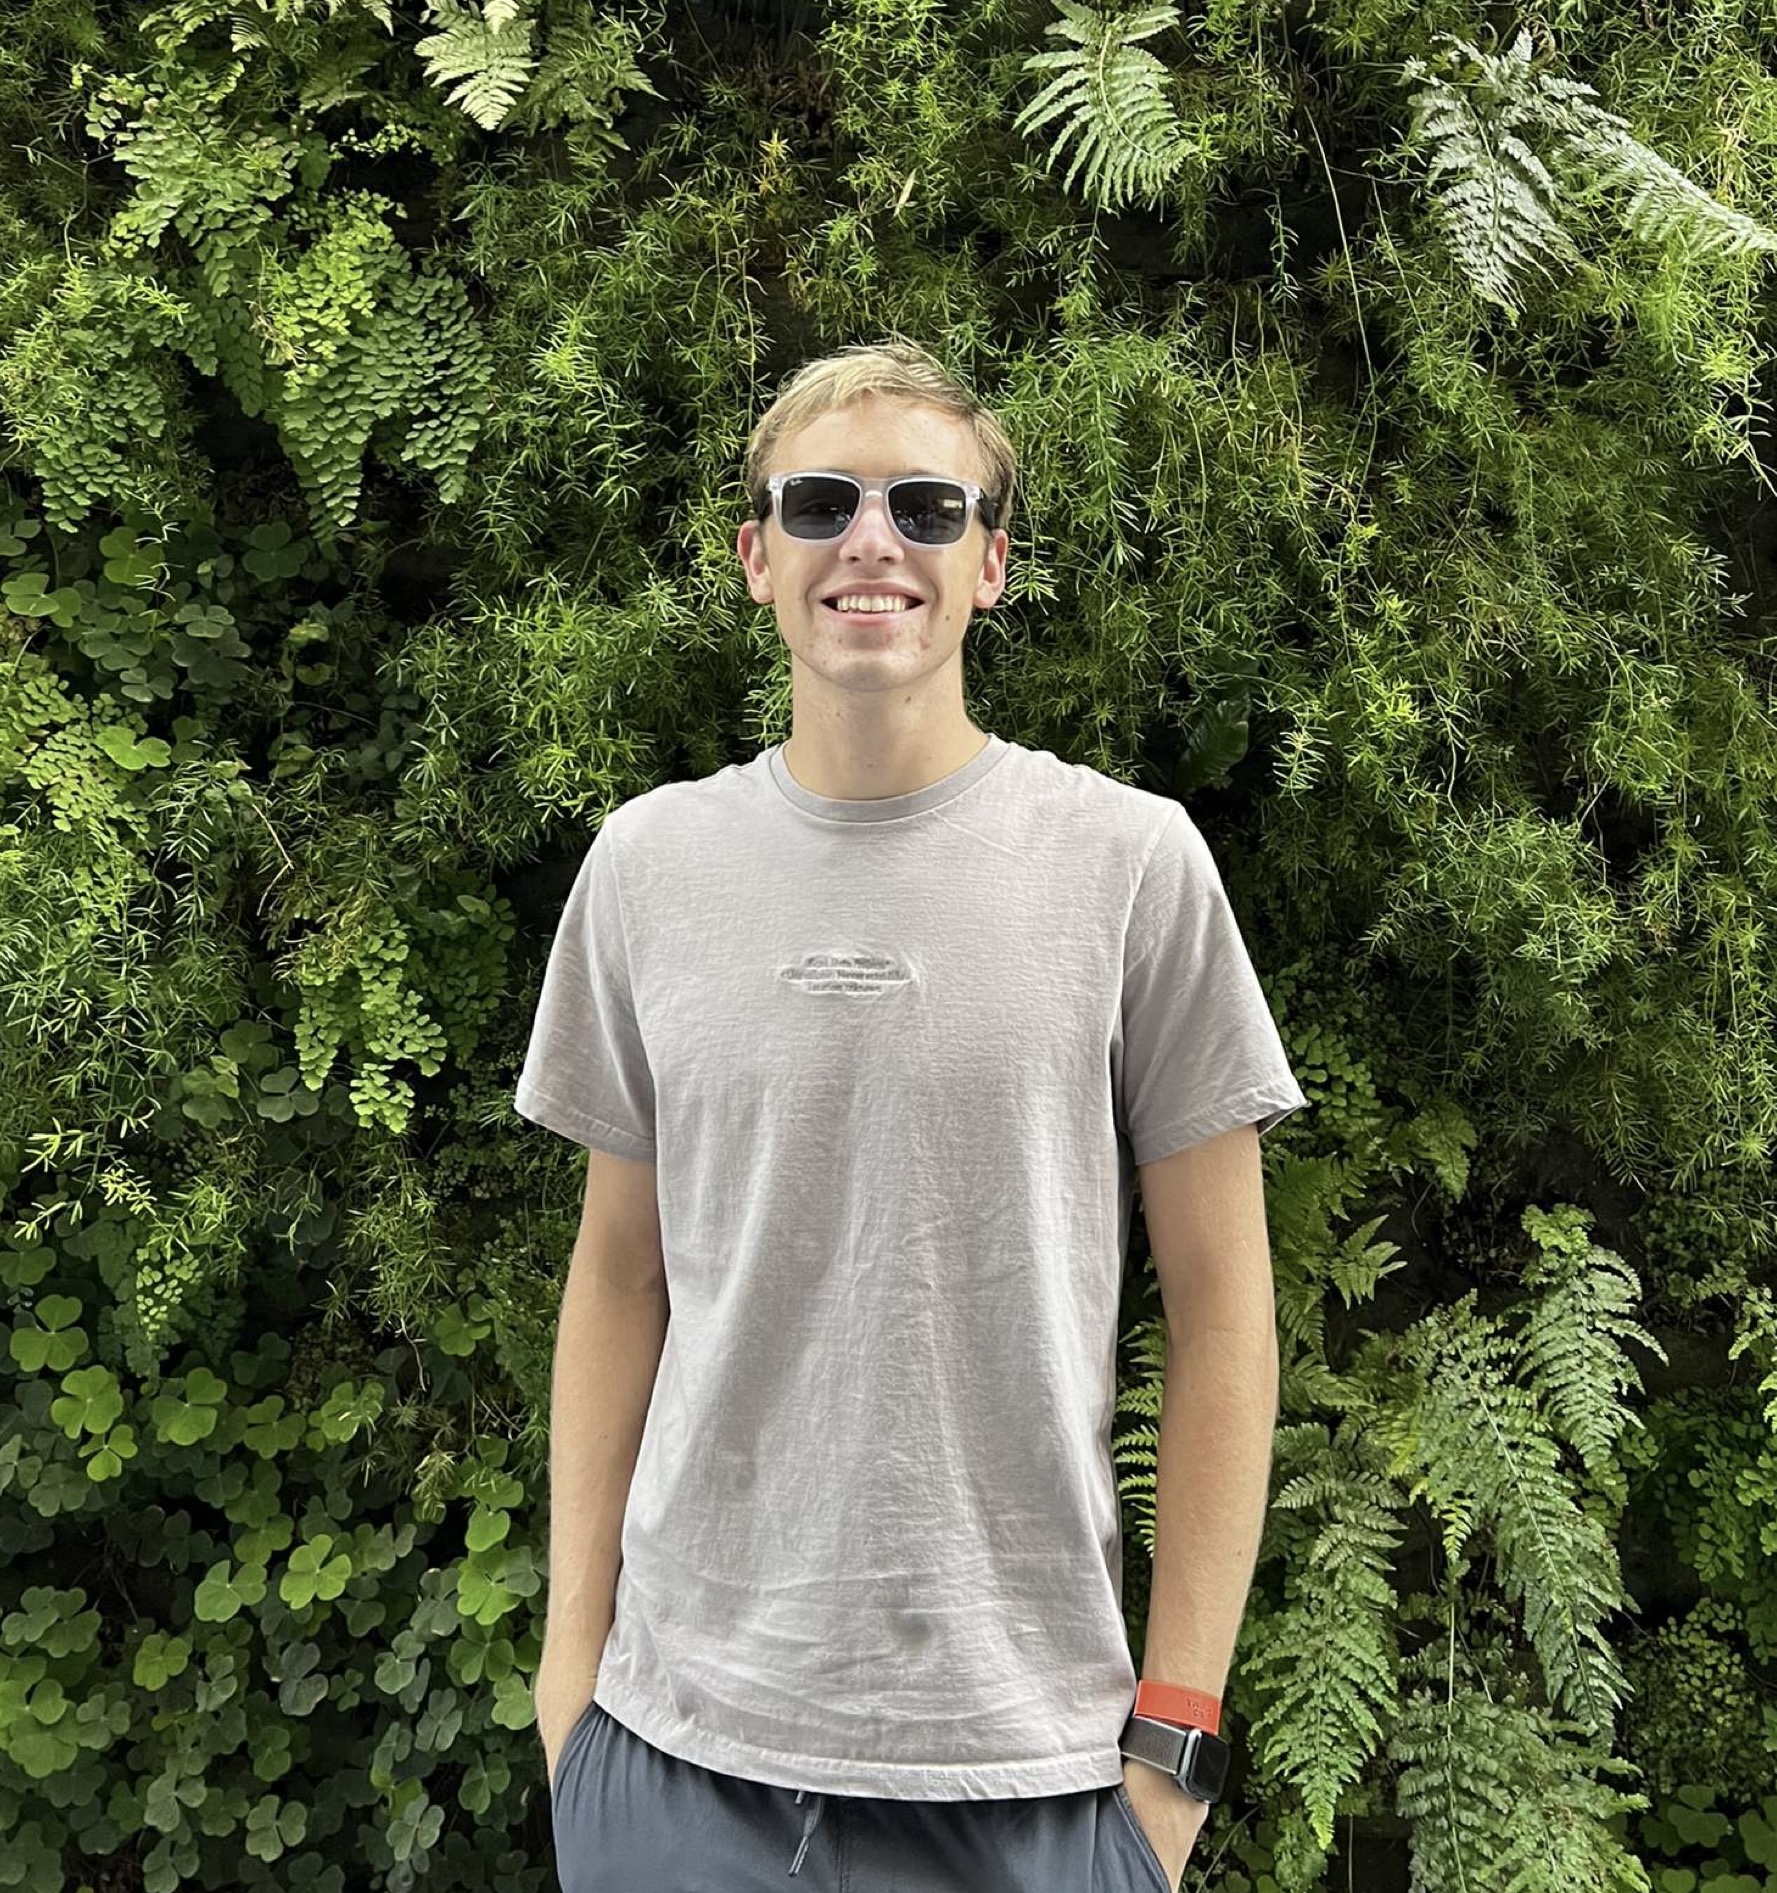 Matthew Van Dyke standing in front of a green background